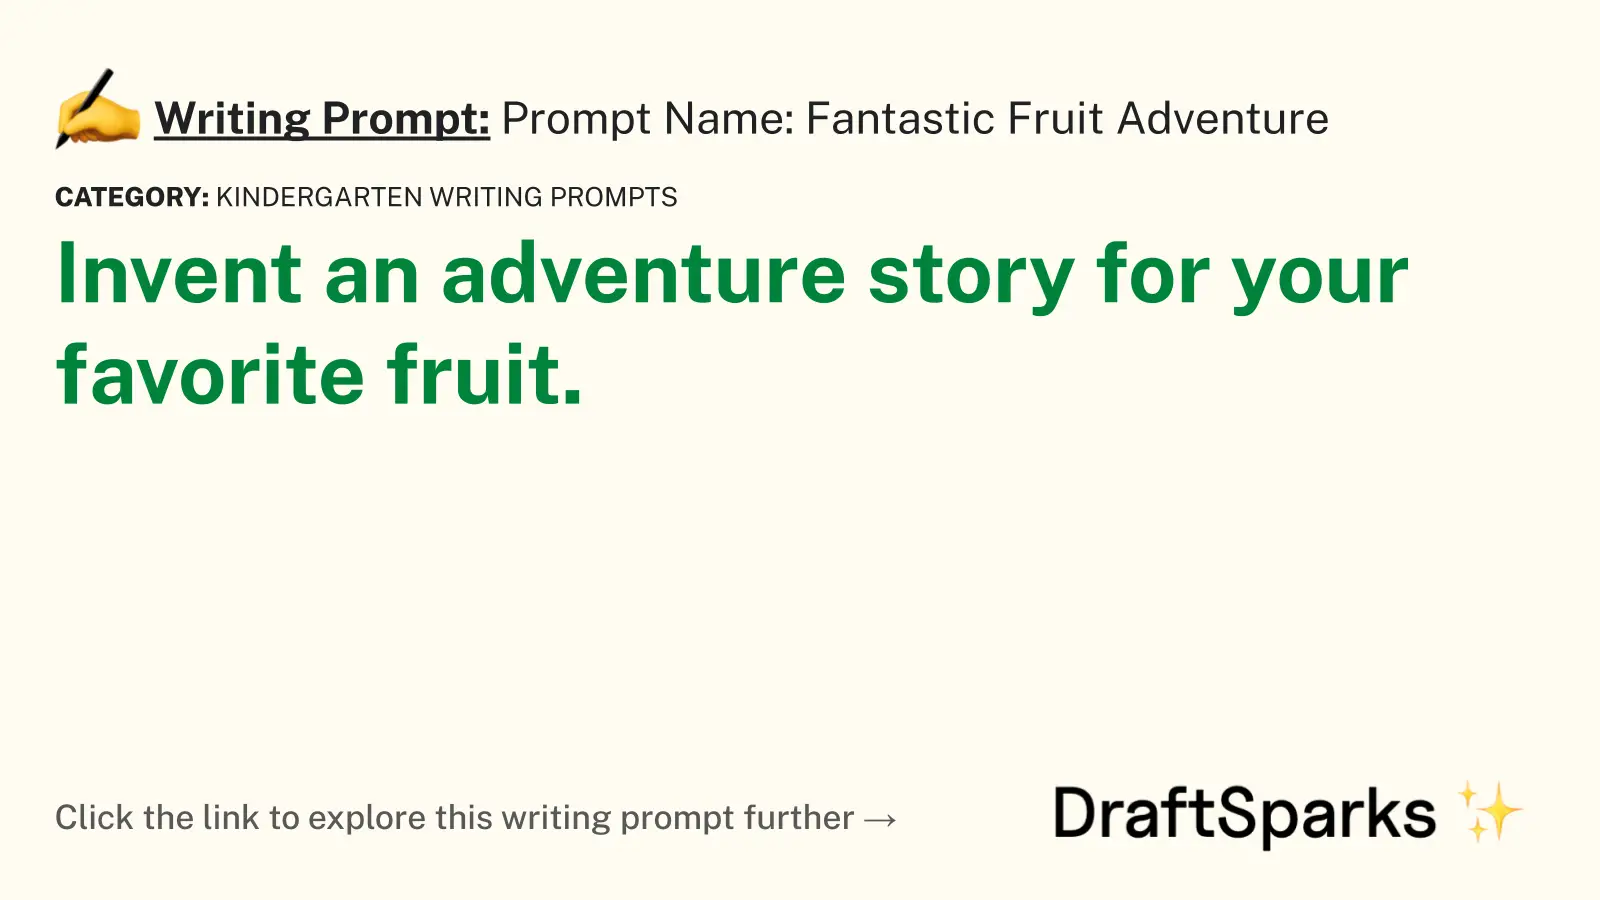 Prompt Name: Fantastic Fruit Adventure